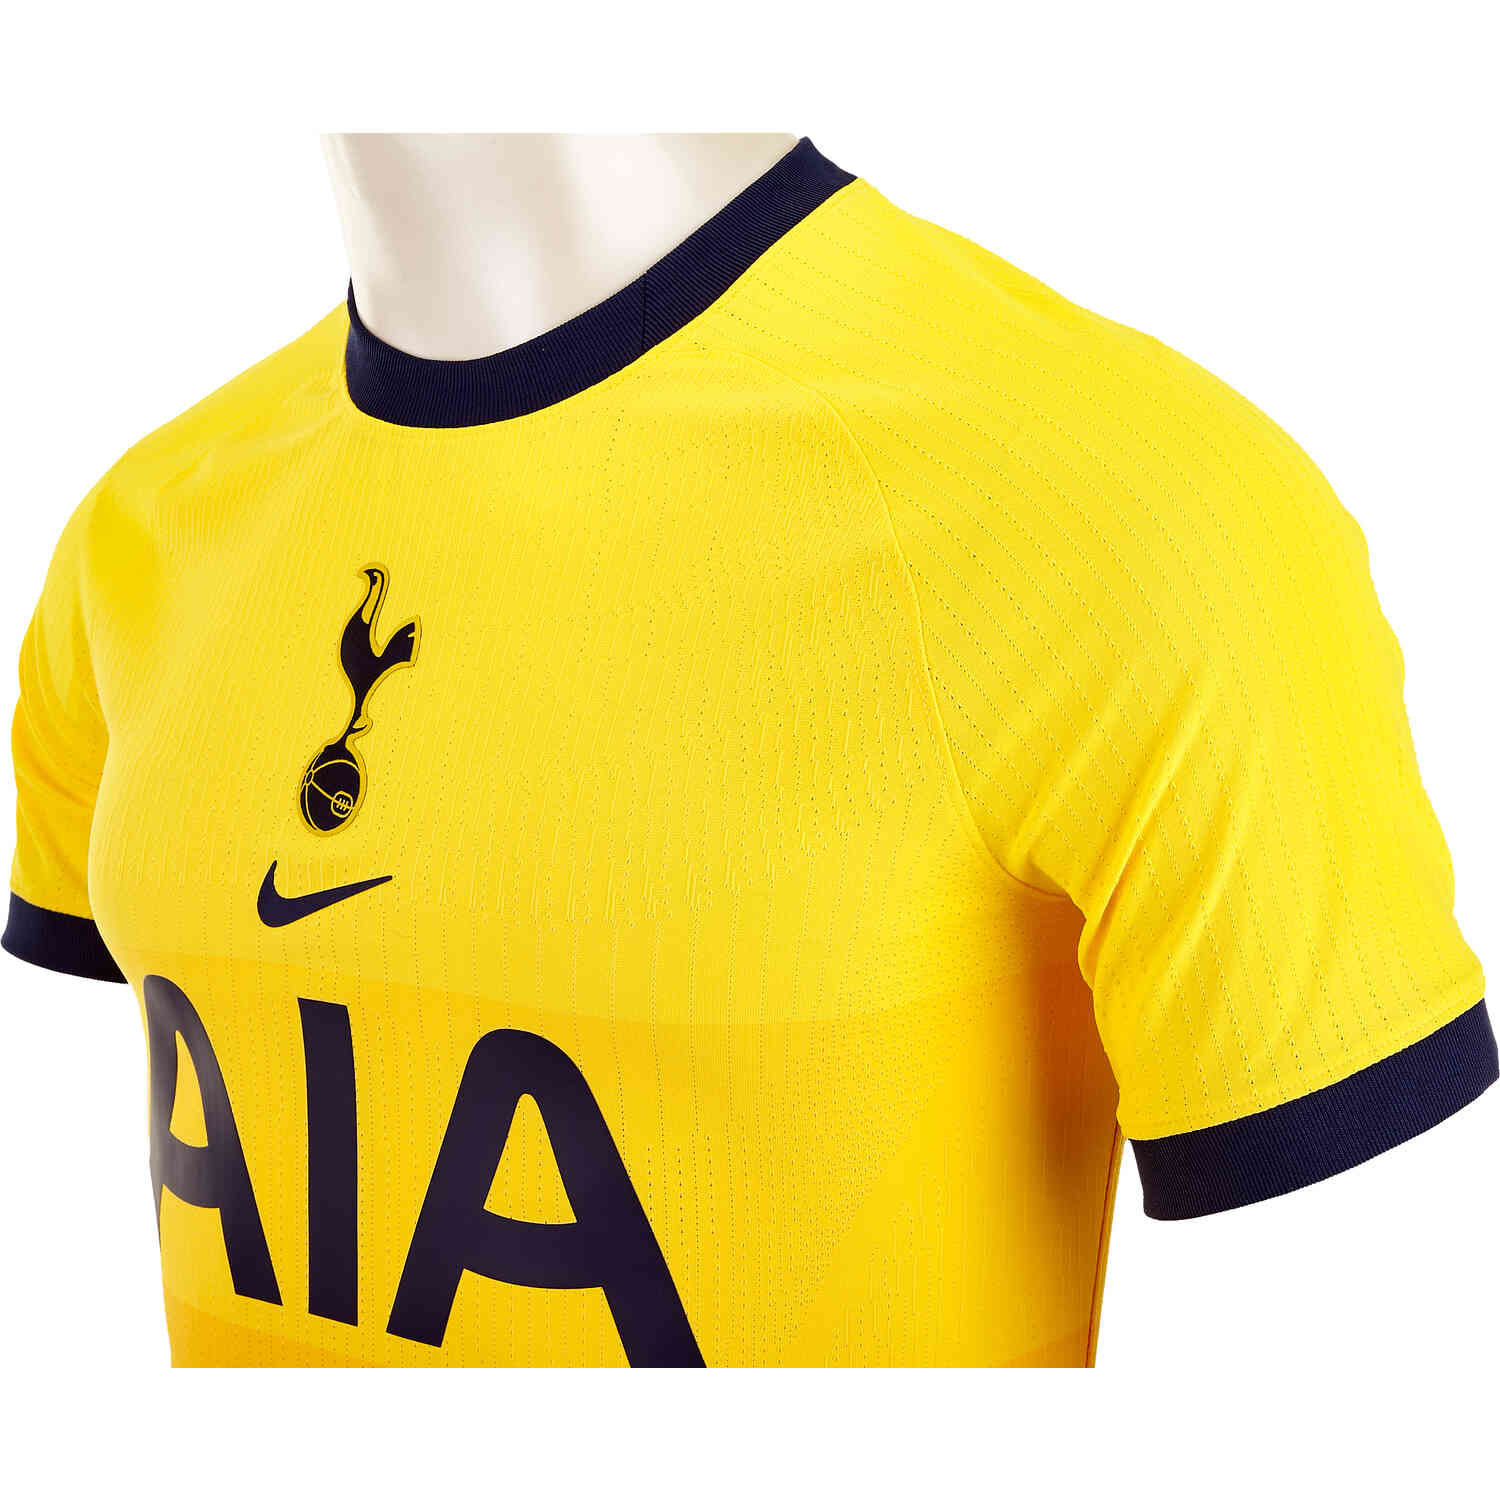 Tottenham Hotspur Release 2020-21 Home & Away Kits - Pursuit Of